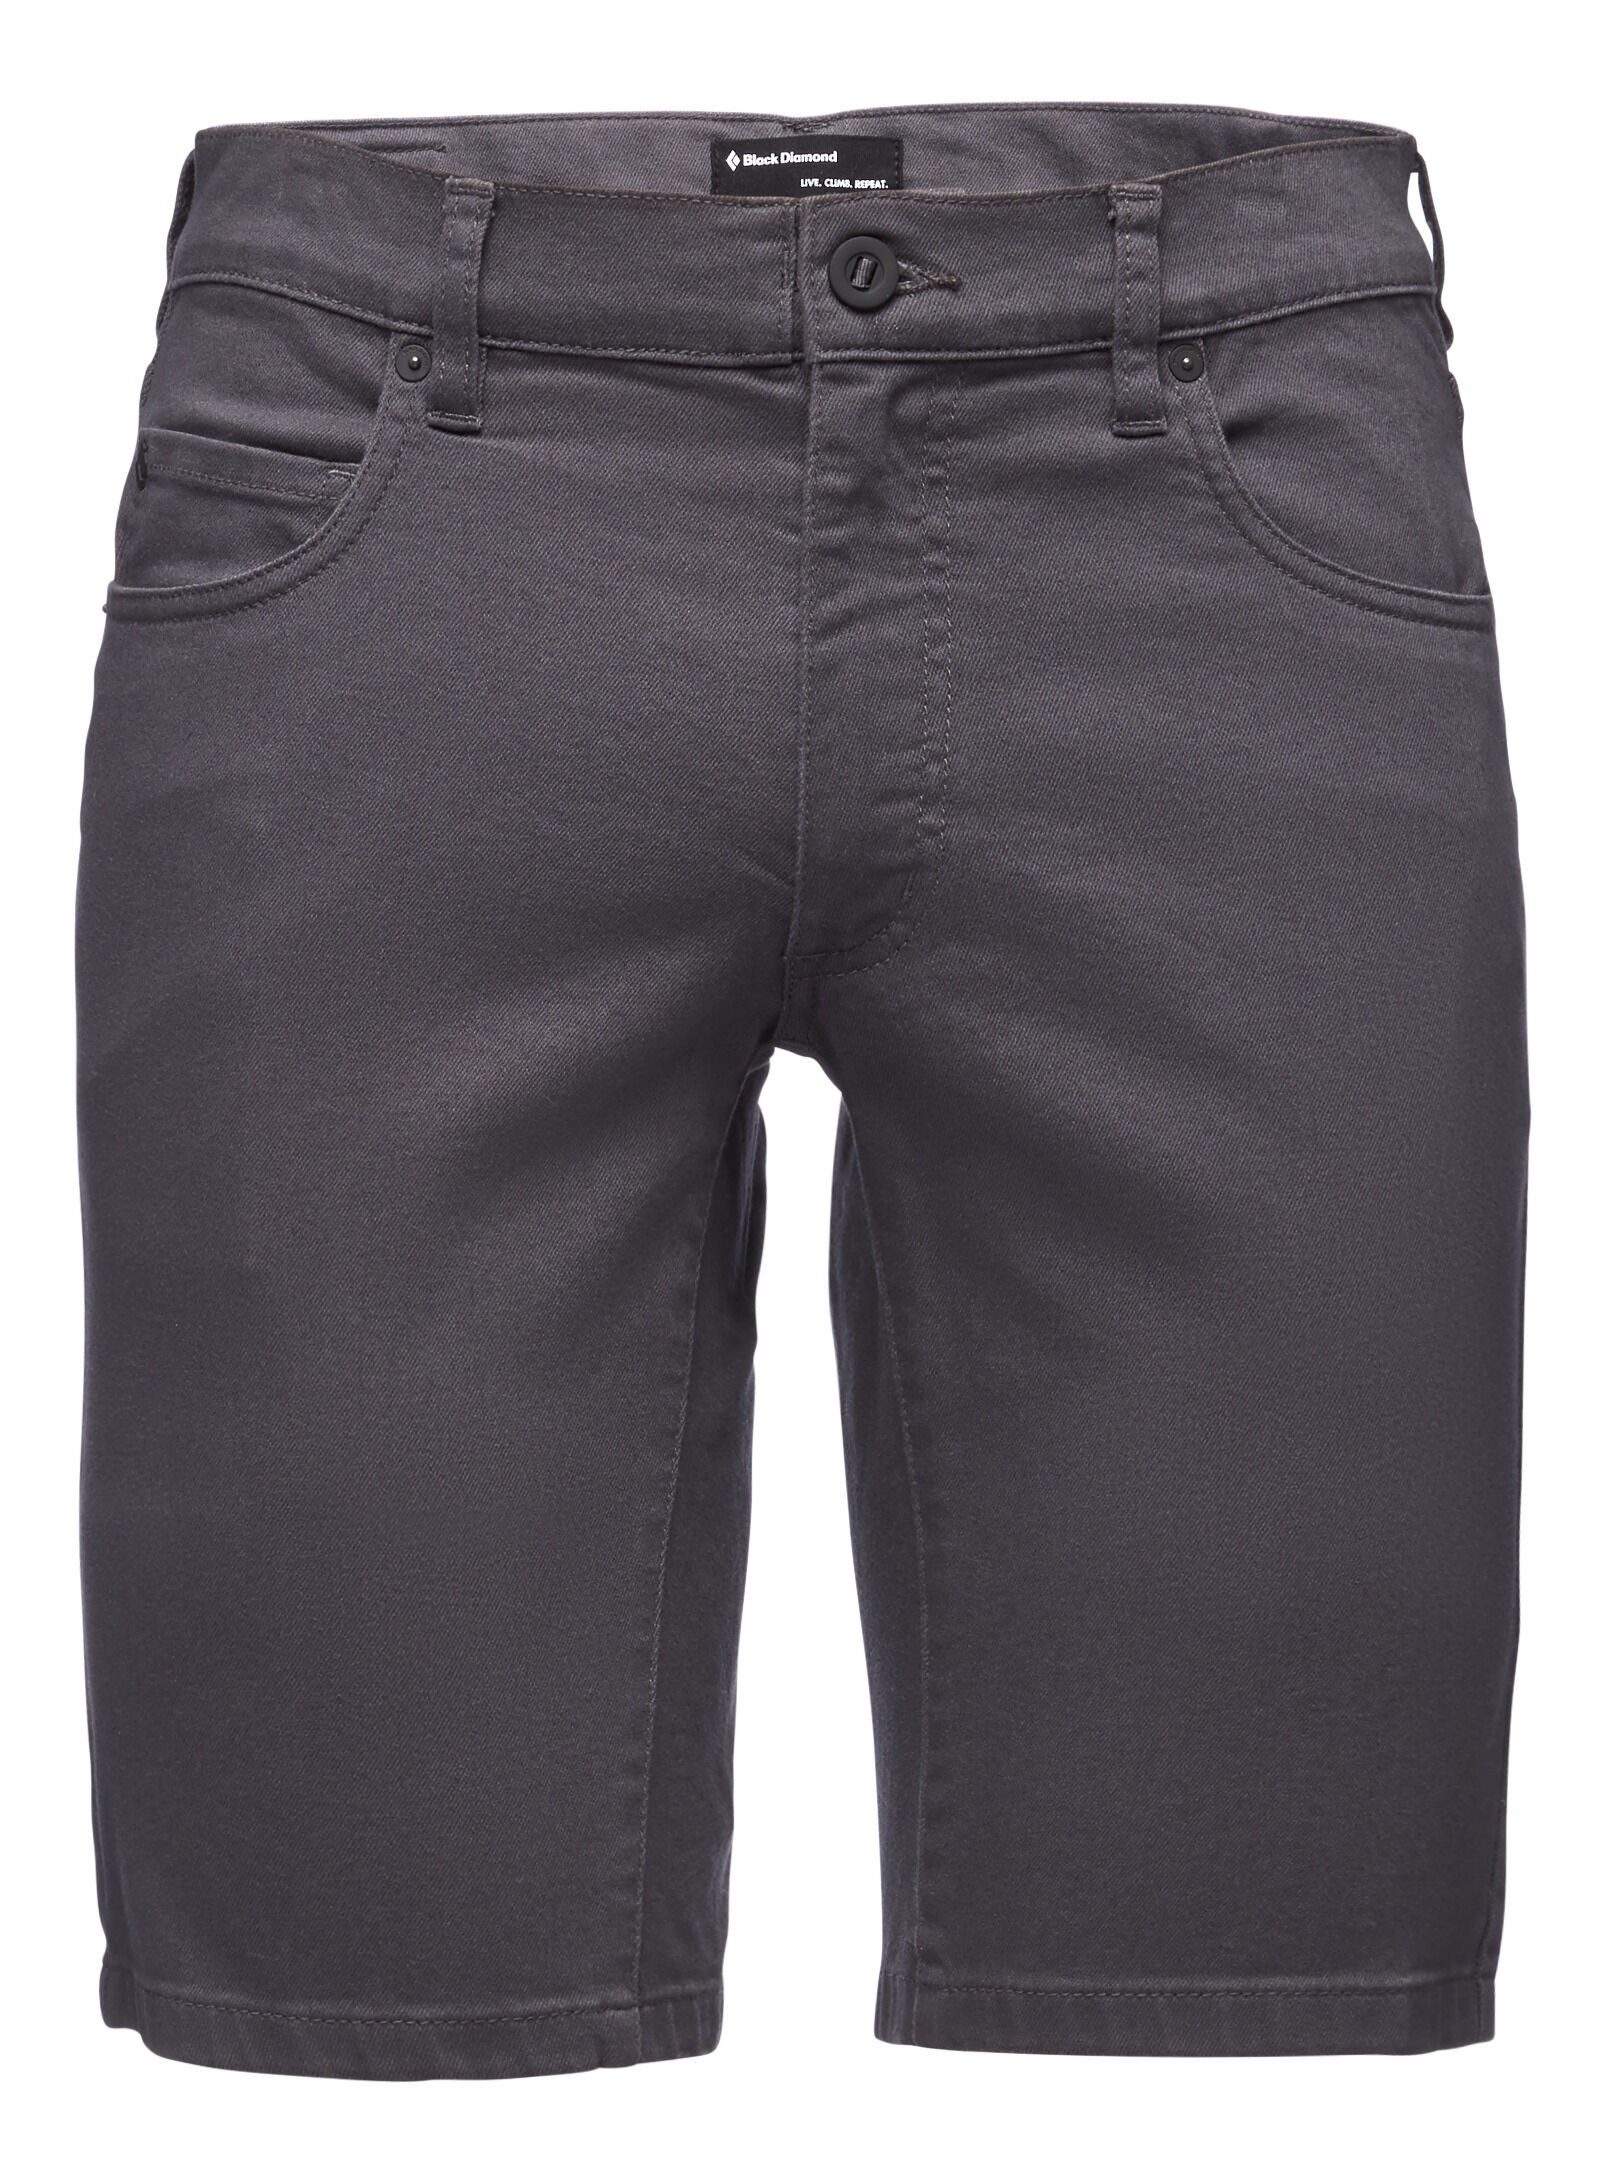 Black Diamond - Stretch Font Shorts new - Pantaloni da arrampicata - Uomo